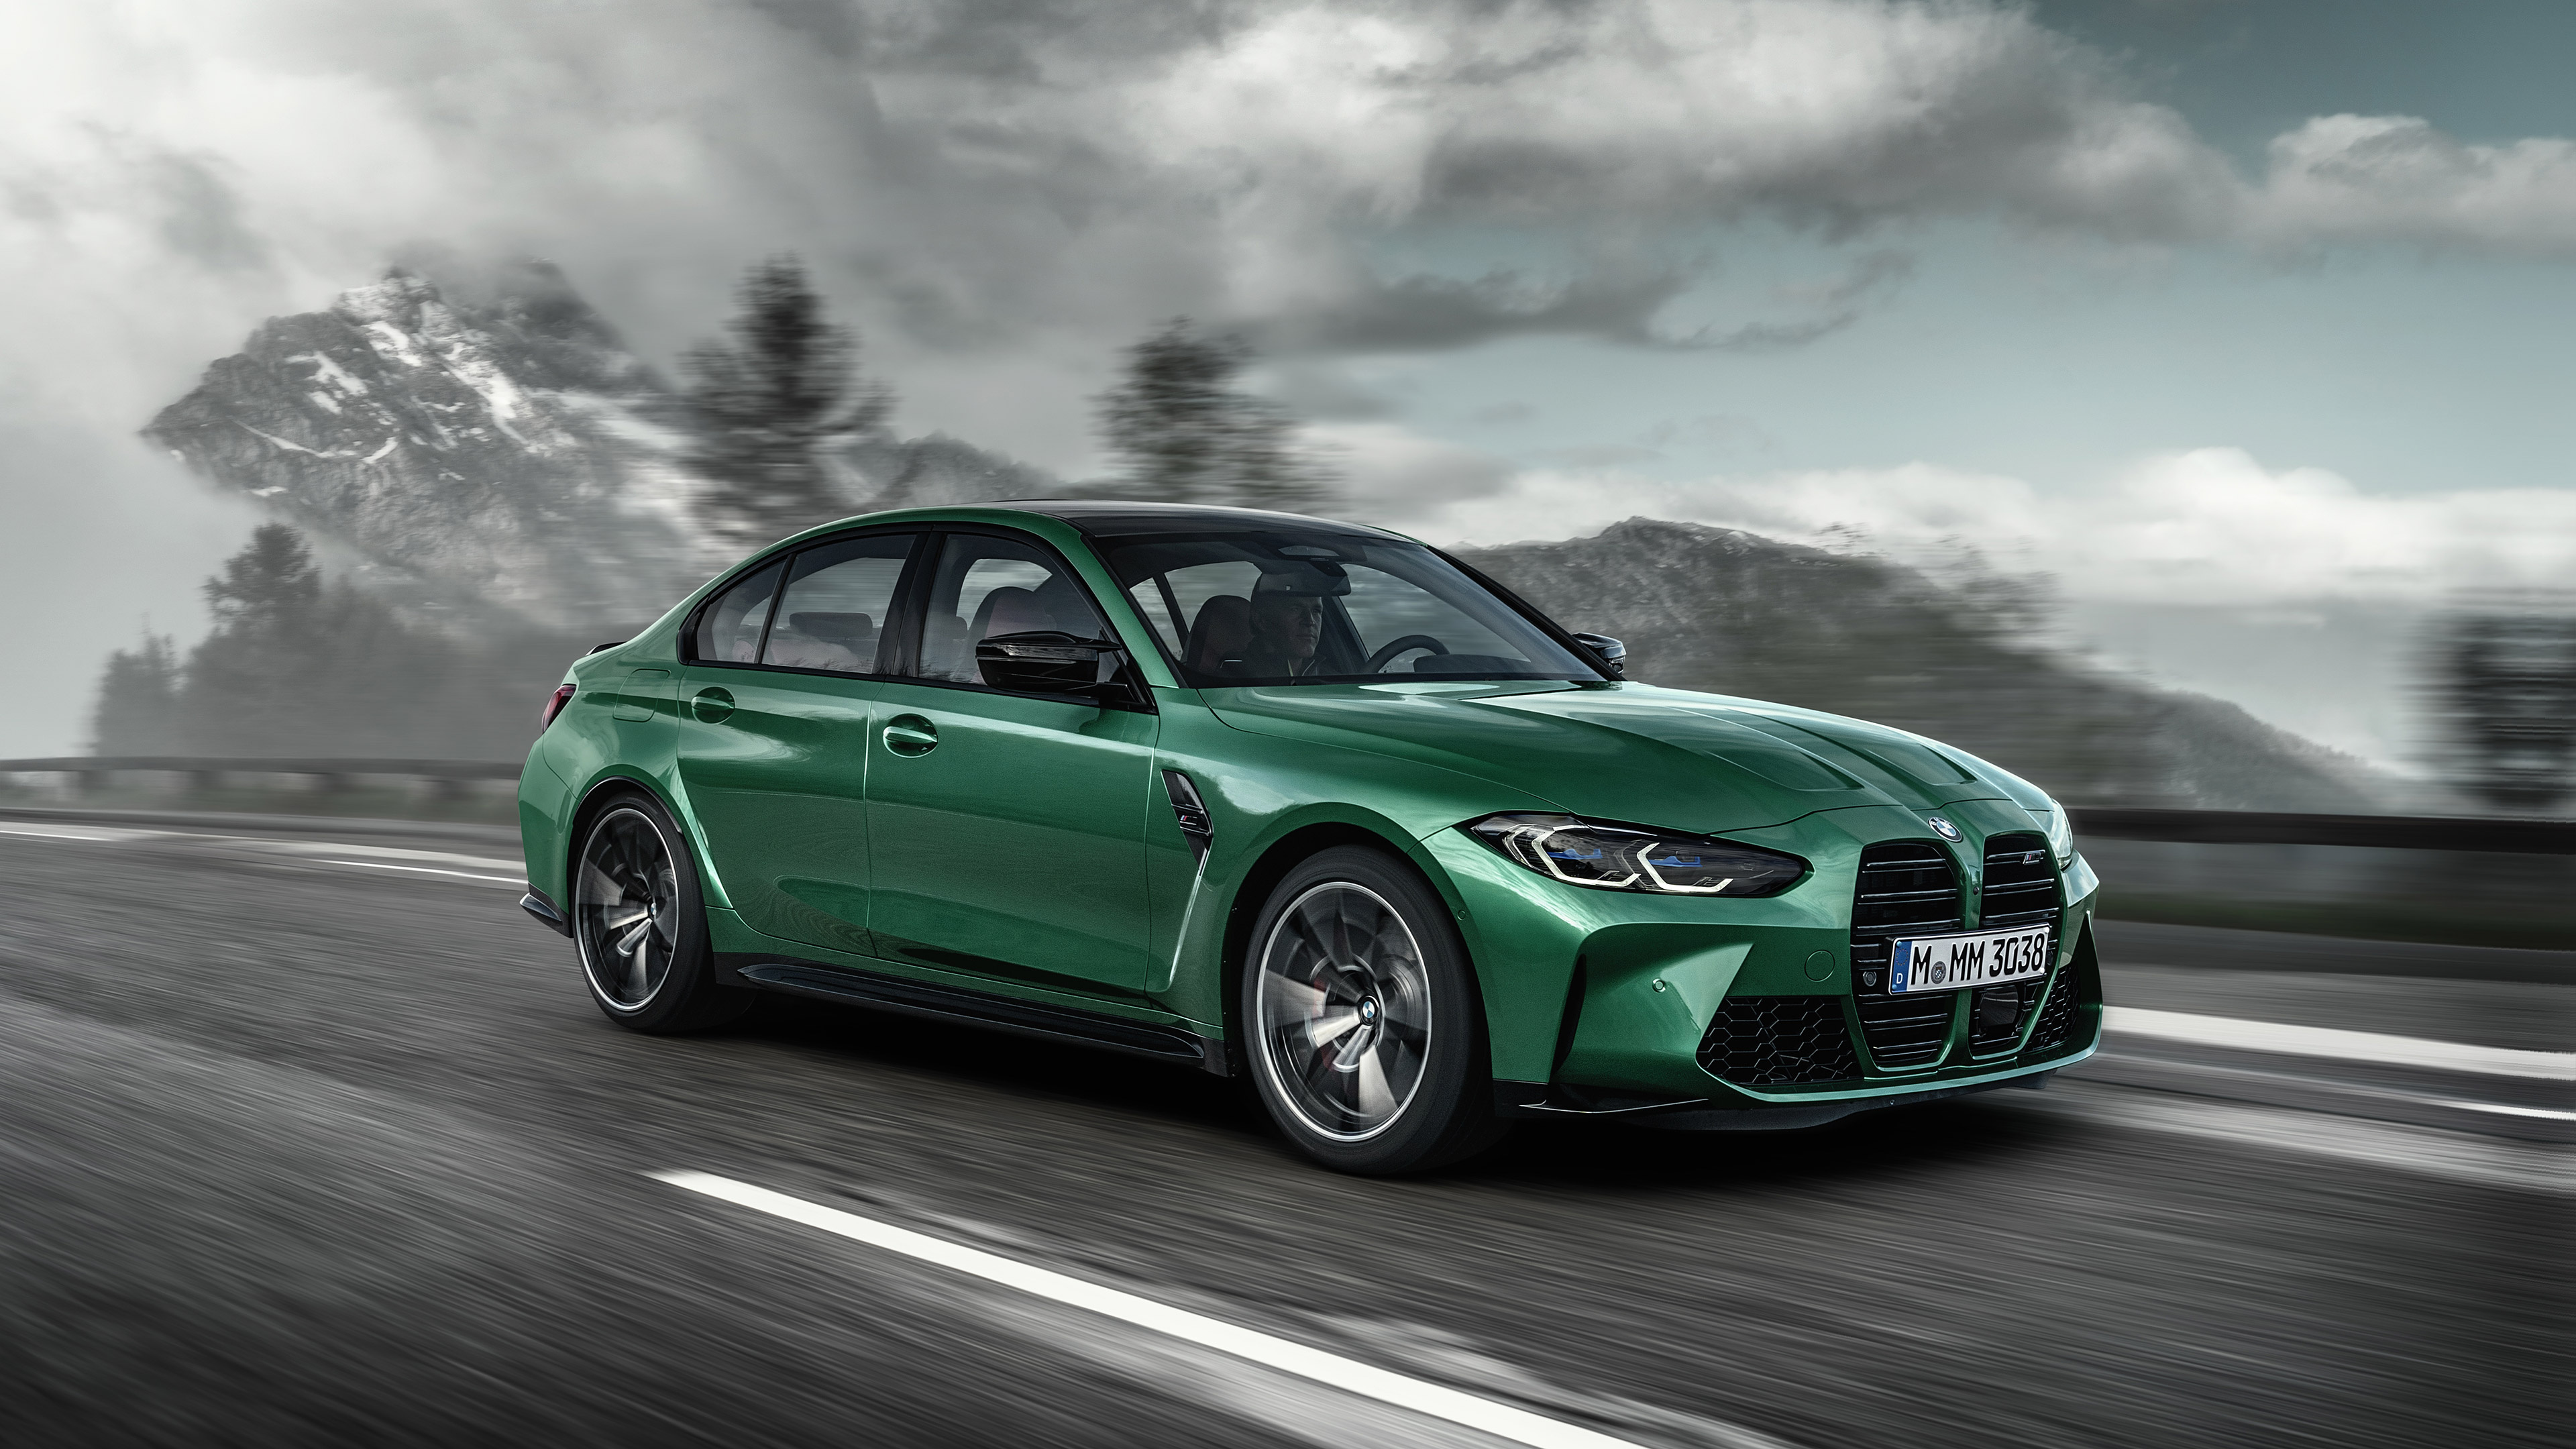 BMW M3 Competition, 4K Ultra HD wallpaper, Luxury sports car, Stunning design, 3840x2160 4K Desktop